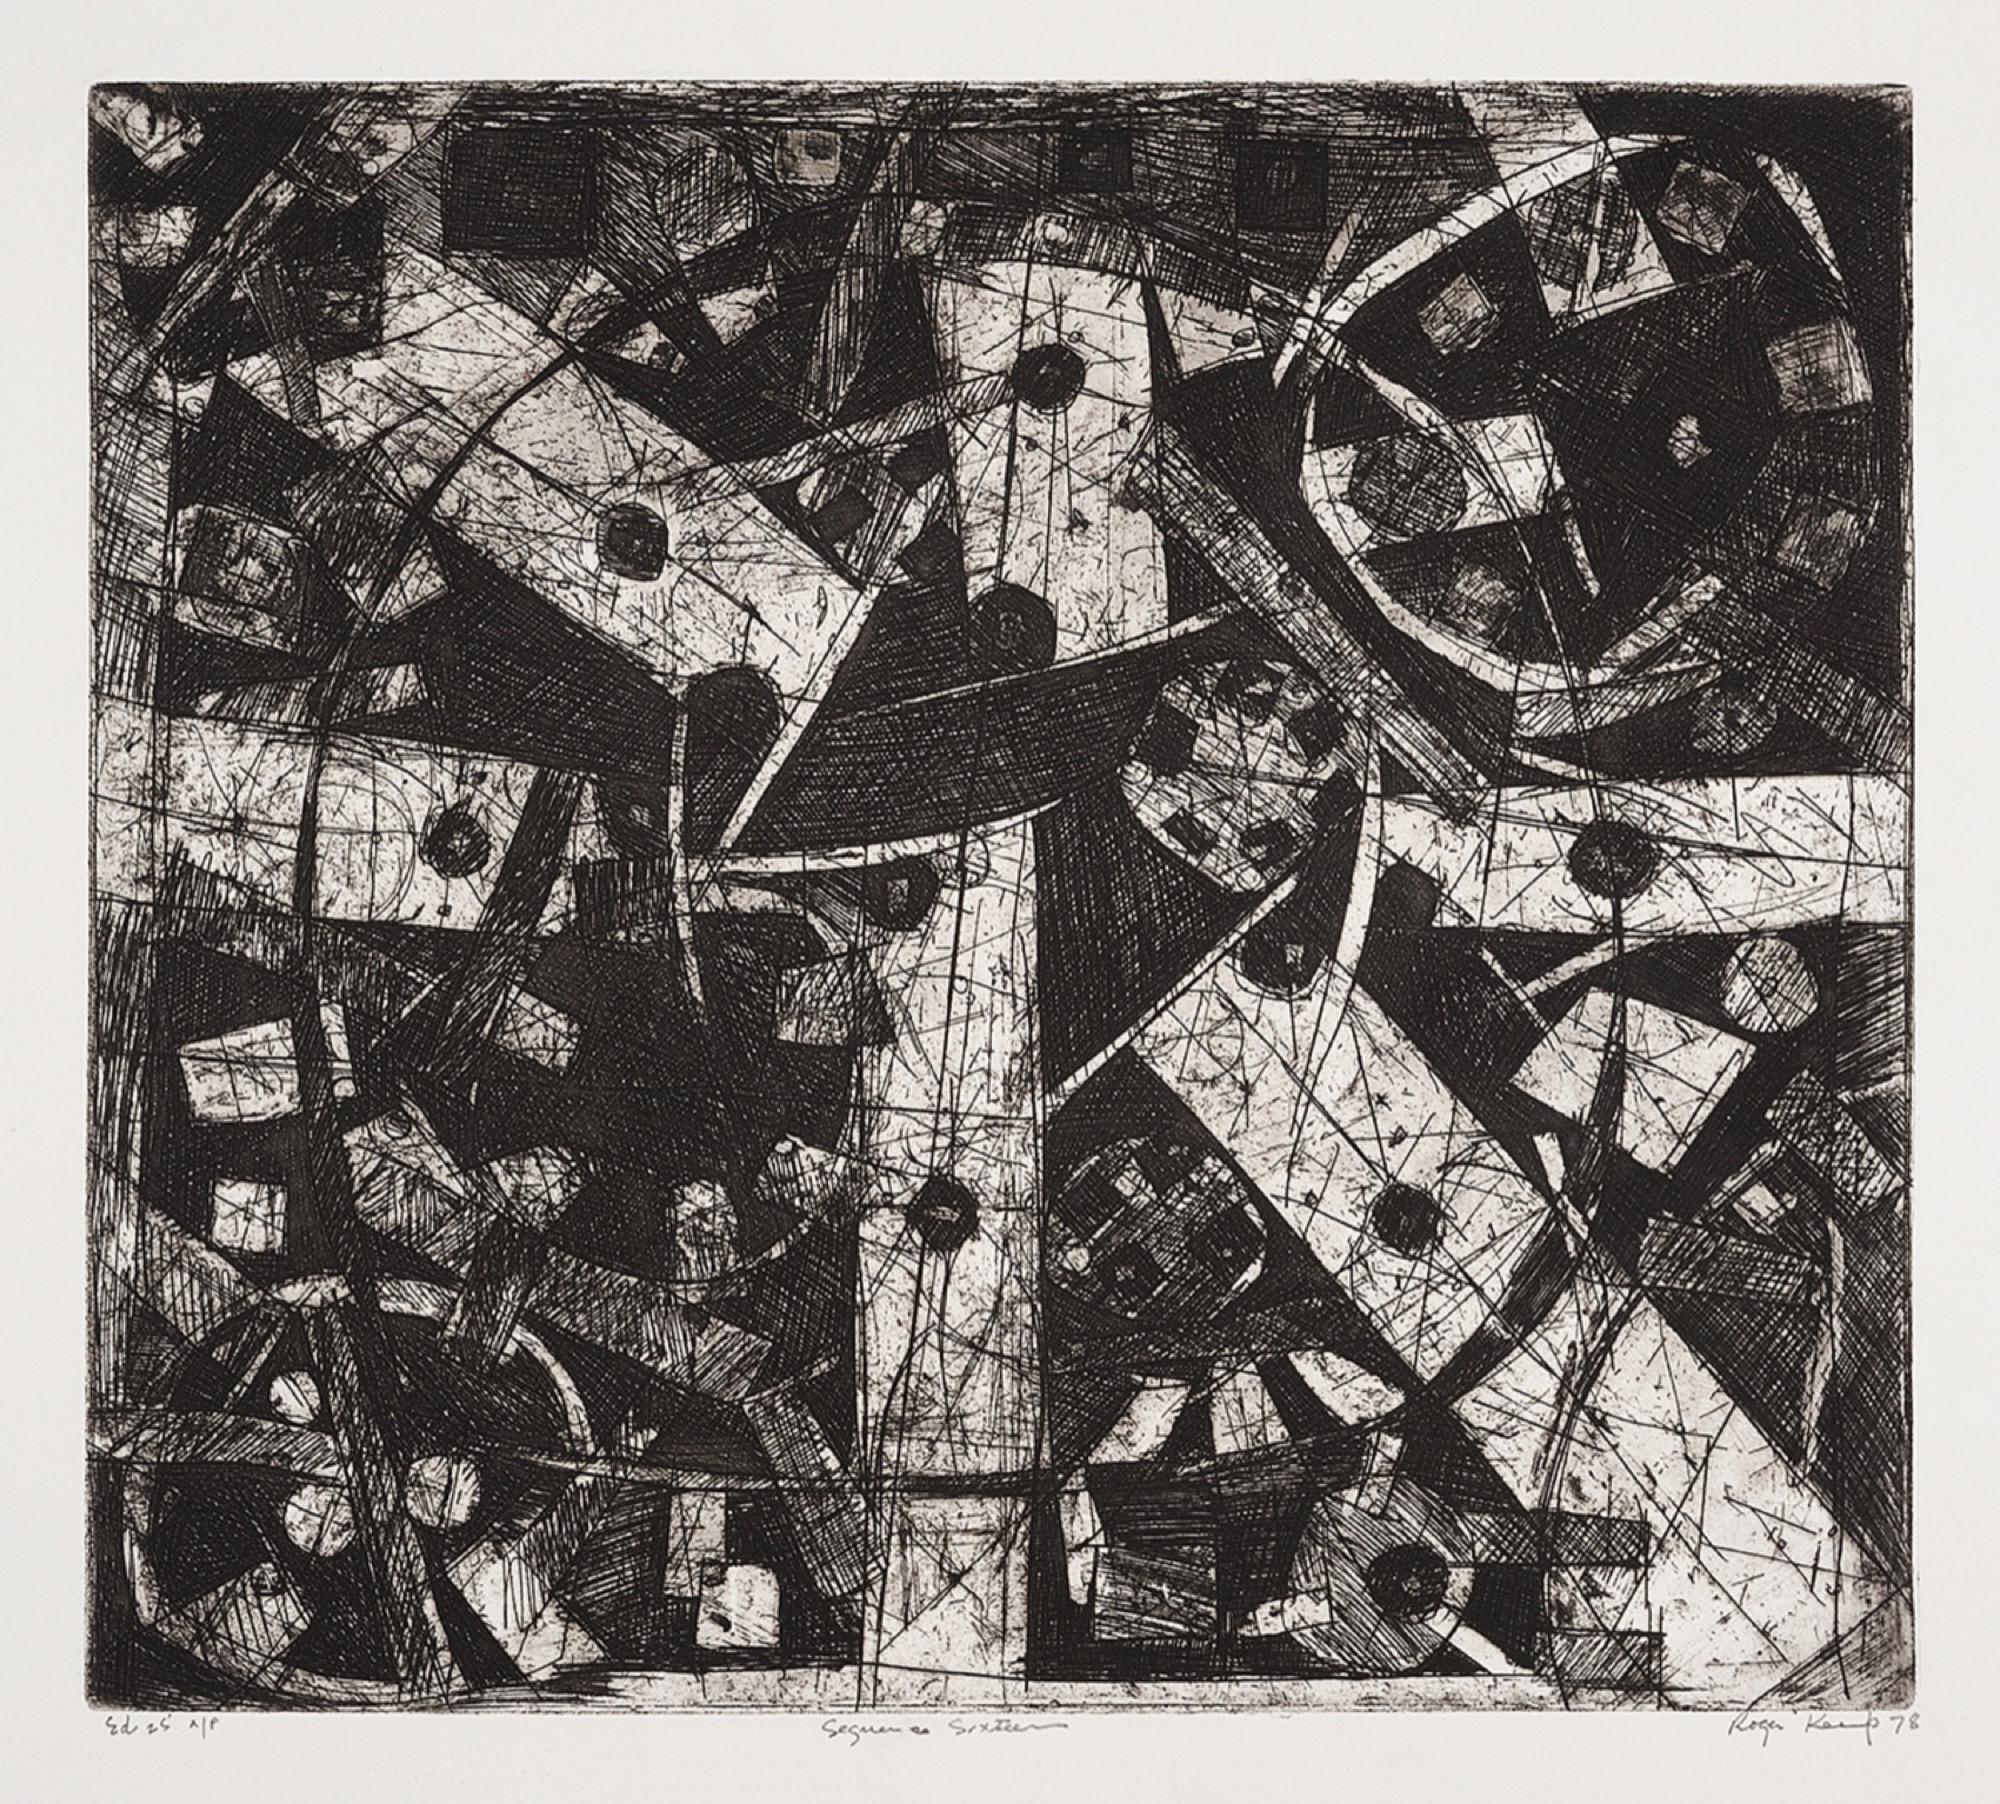 Roger Kemp, <em>Sequence Sixteen</em>, 1978, etching on paper, 45.3 x 50.4 cm. Copyright Estate of Roger Kemp, Image courtesy Charles Nodrum Gallery